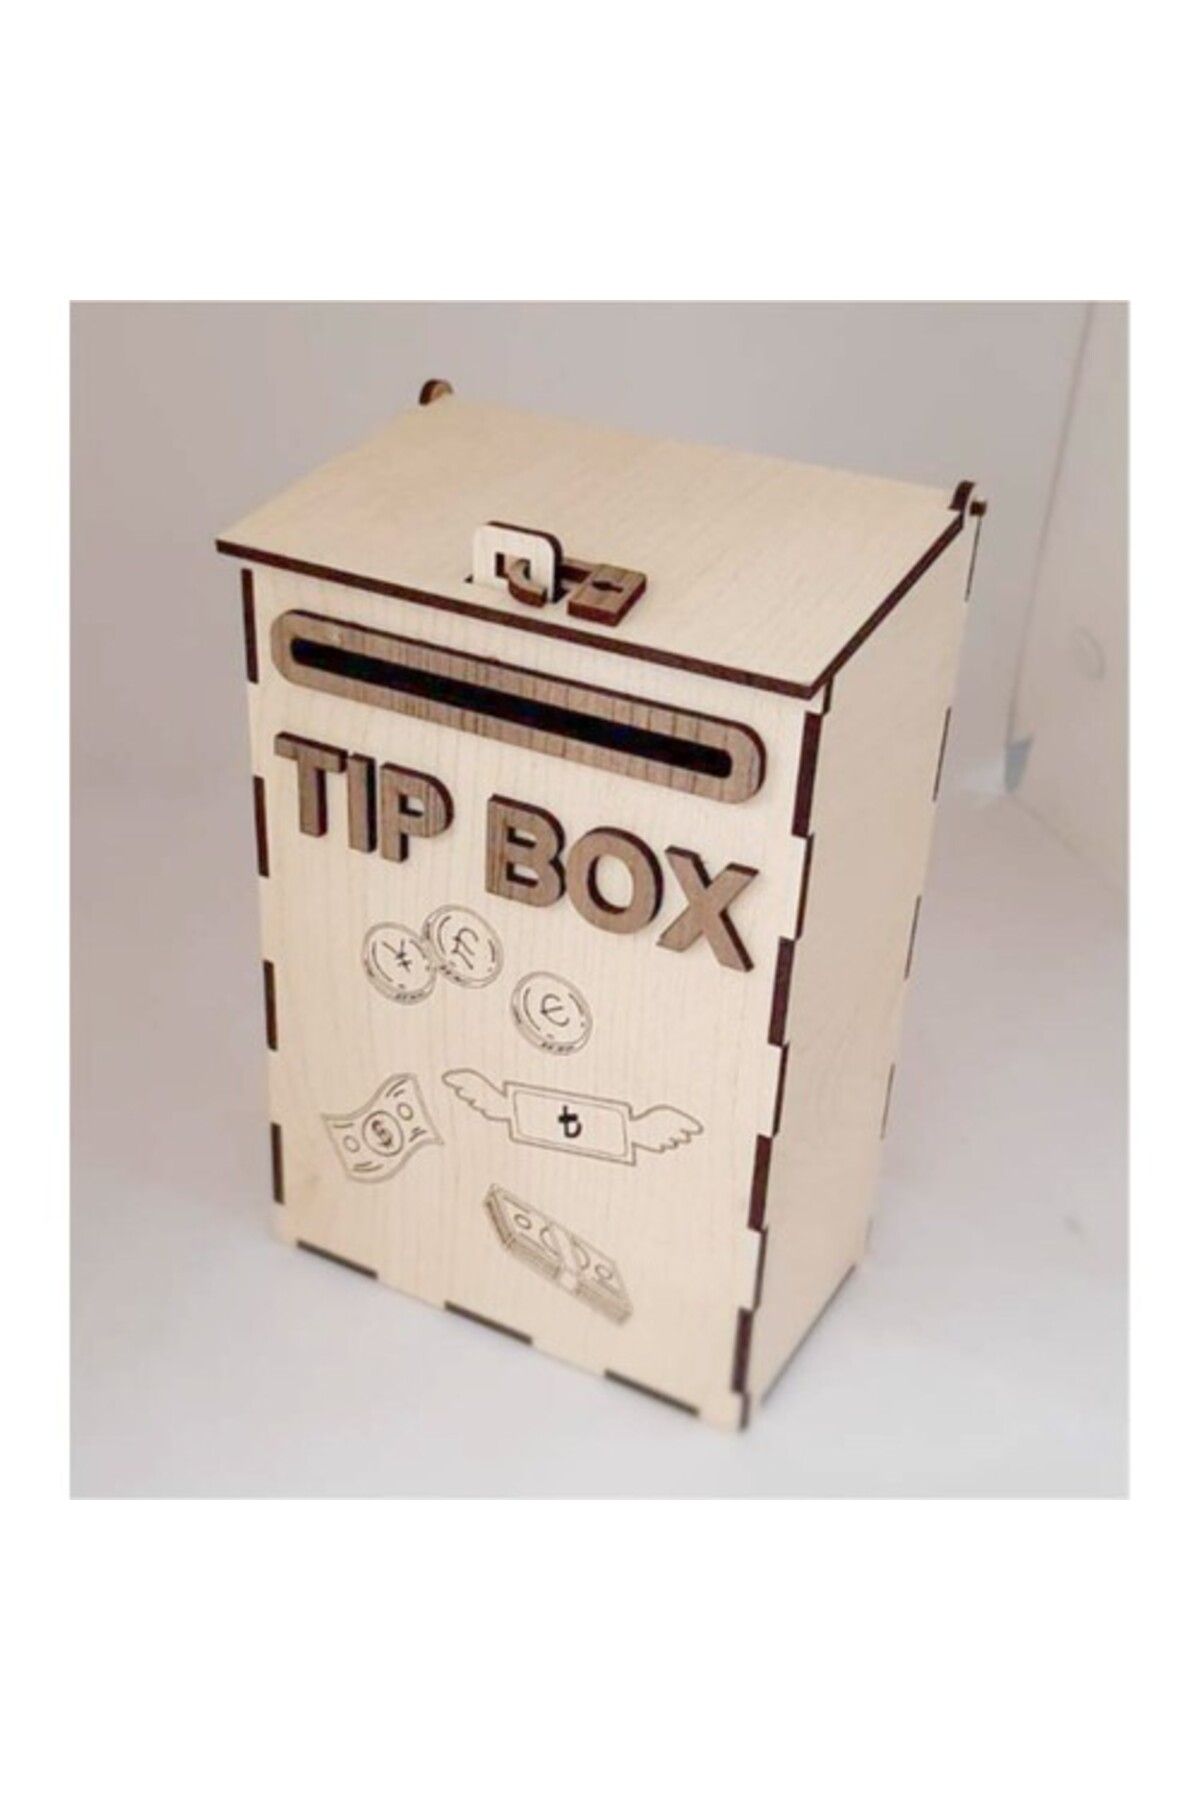 Genel Markalar Tekno Trust Posta Kutusu Tip Box Bahşiş Kutusu Tipbox